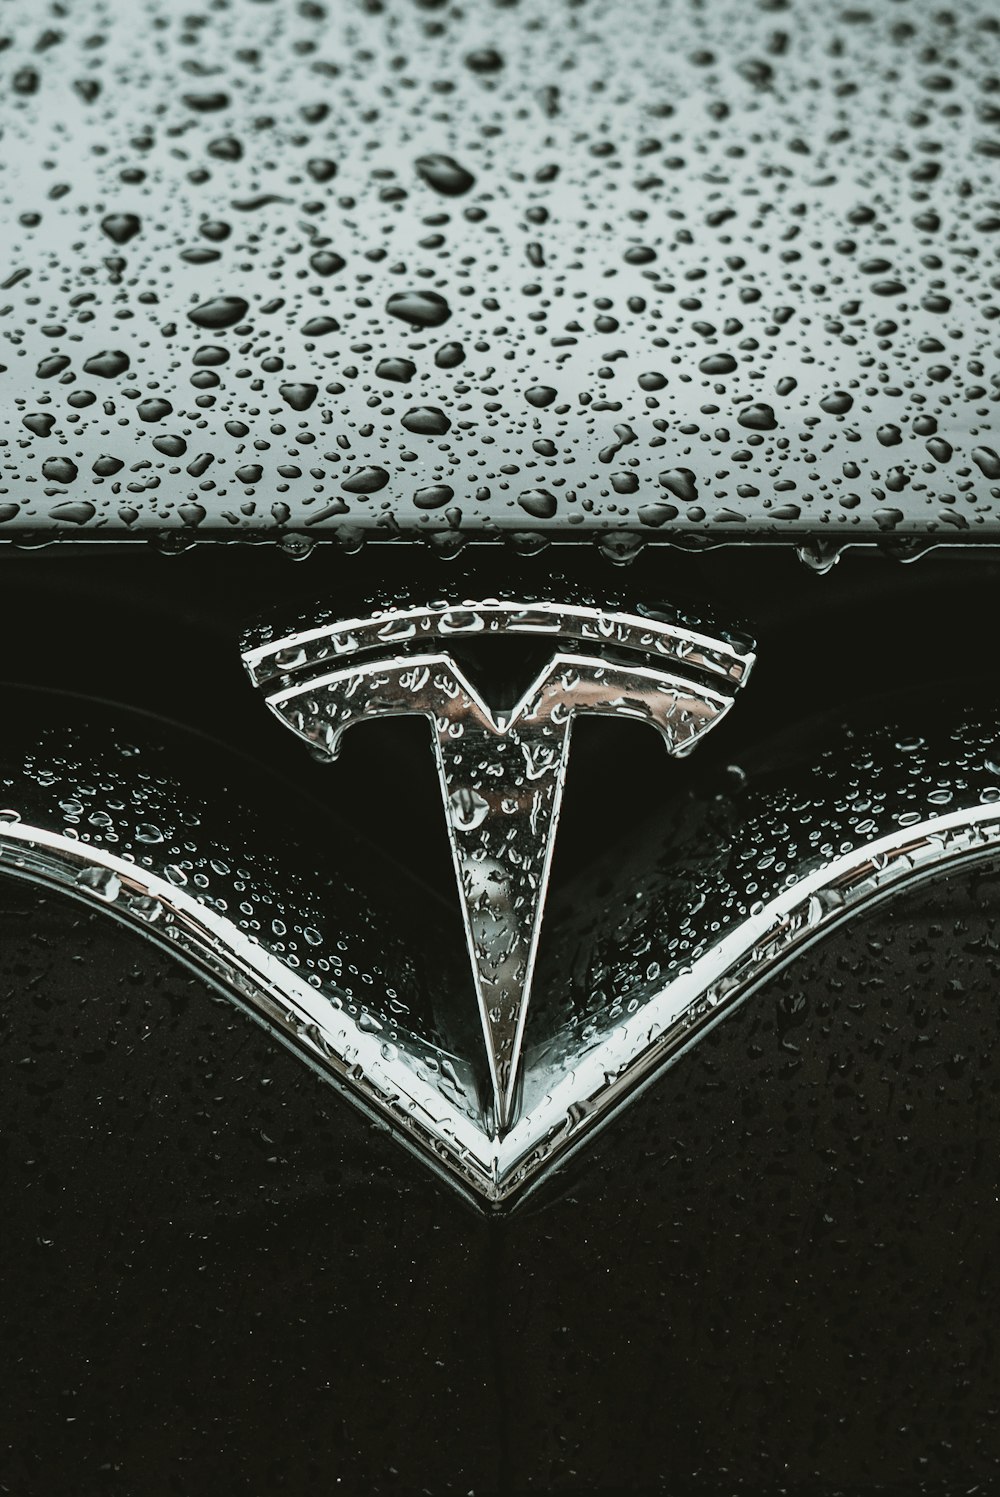 a close up of a car's emblem on a wet surface